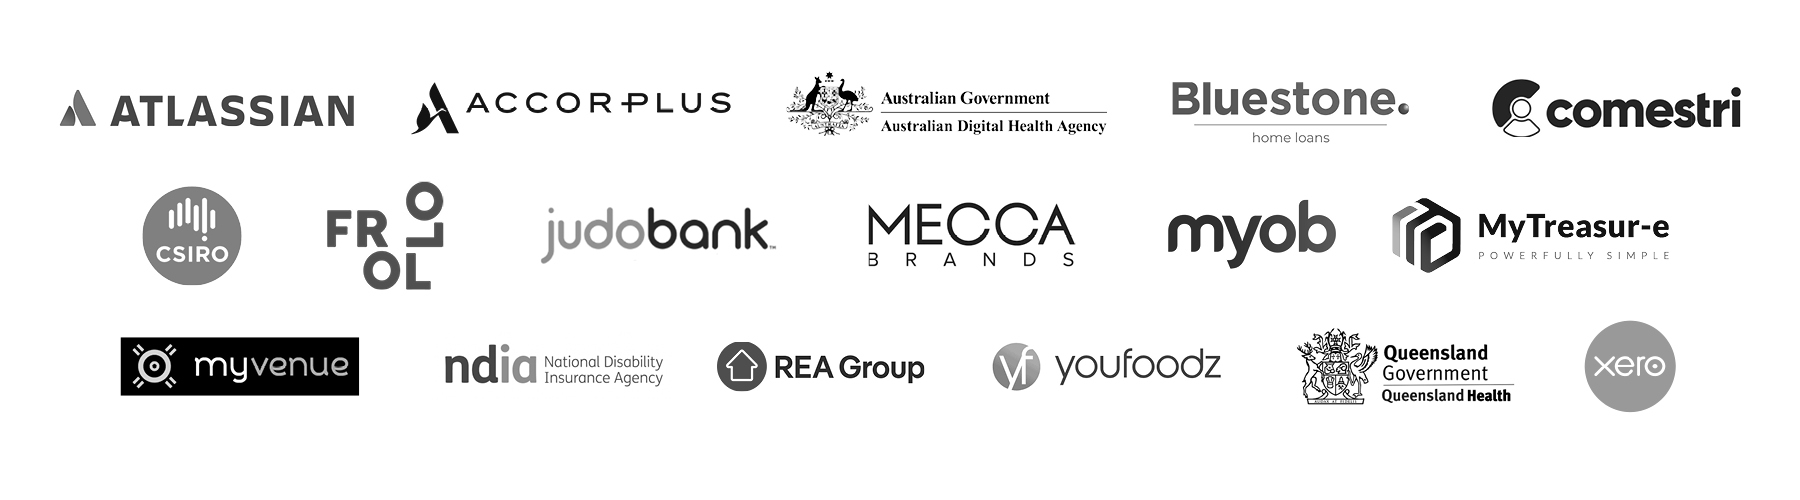 List of logos Atlassian, Accorplus,Australian Government,Bluetosne, Comestri,CSIRO, Frollo, Judobank, Mecca, Myob, Mytreasure,Myvenue,NDIA, Rea group, youfoodz,Queensland Government, Xero